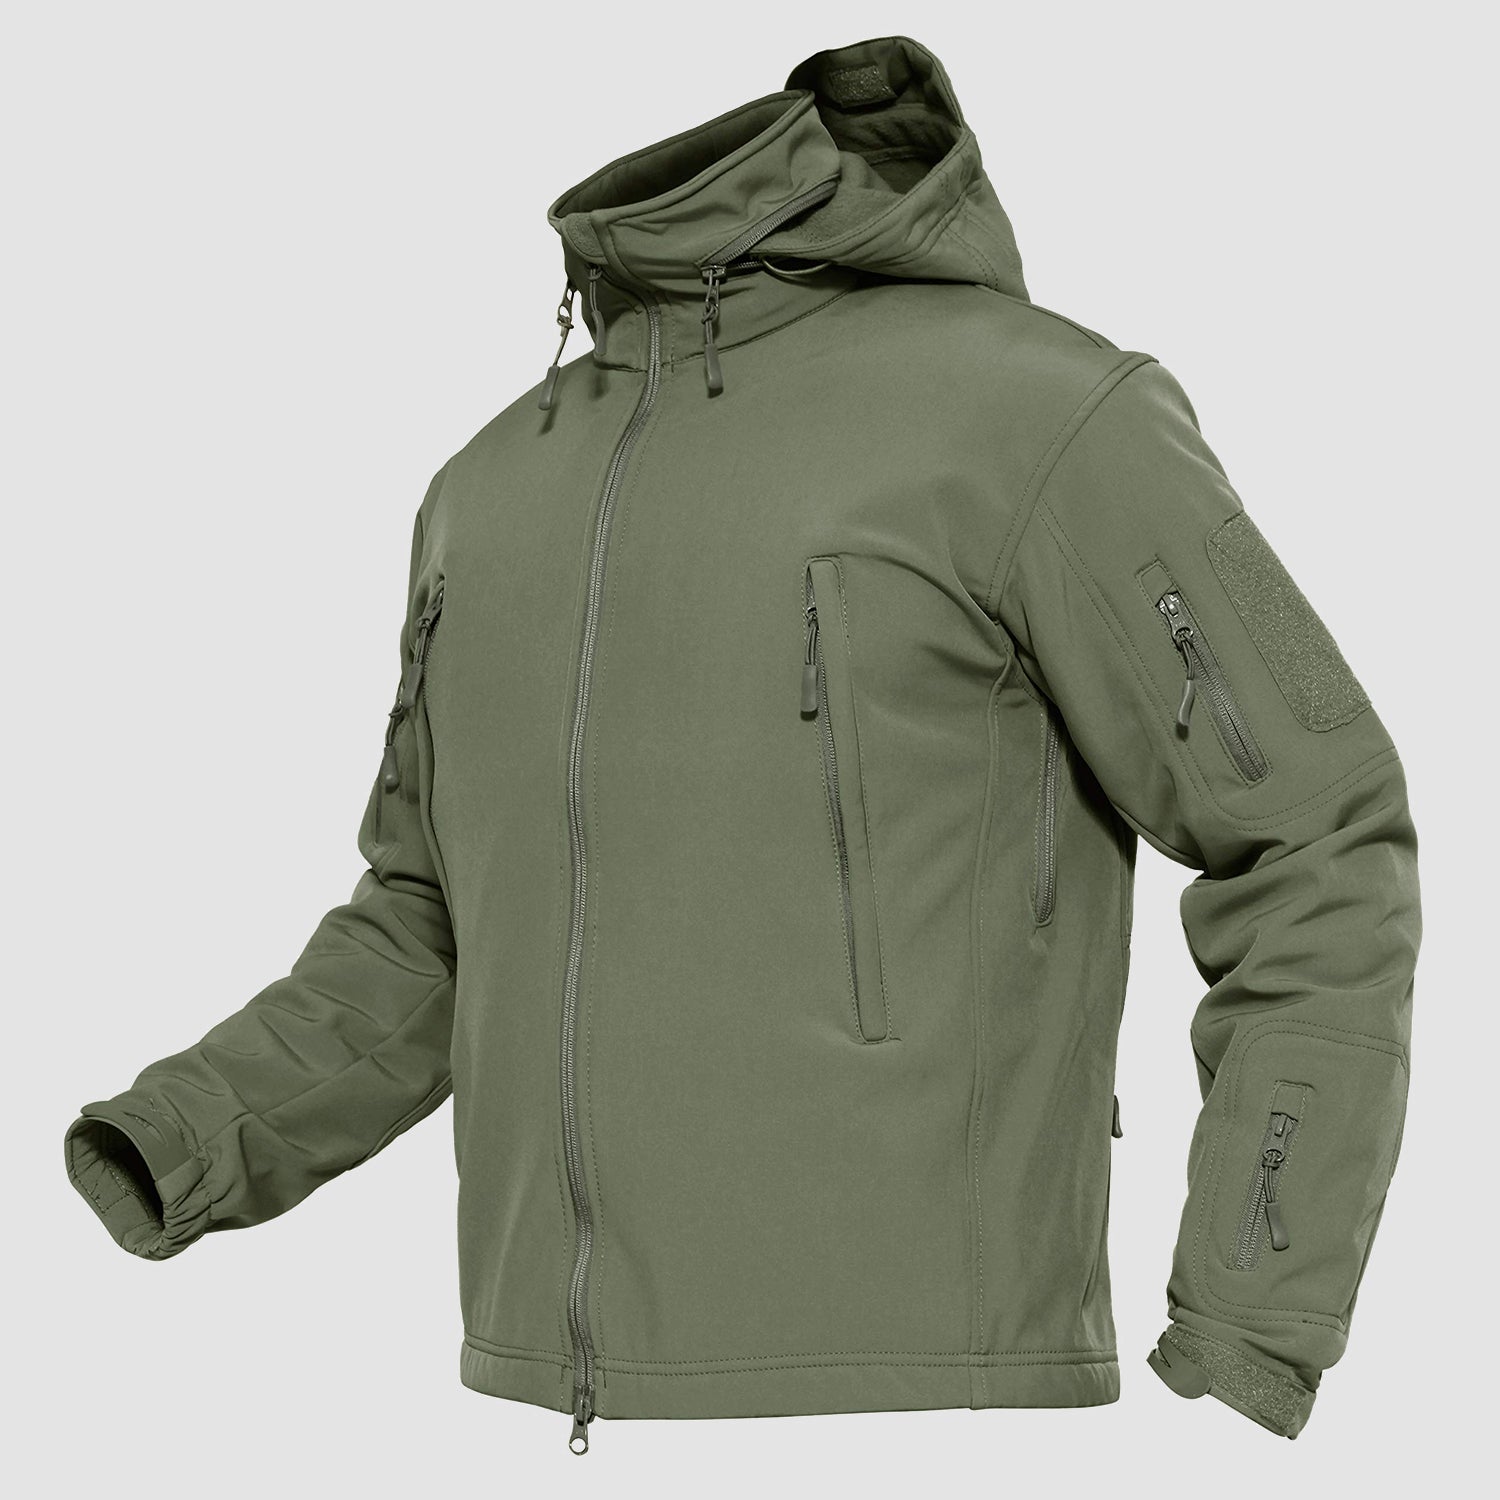 Men's Tactical Jacket Winter Snow Ski Jacket Water Resistant Softshell Fleece Lined Winter Coats Multi-Pockets, Army Green / L